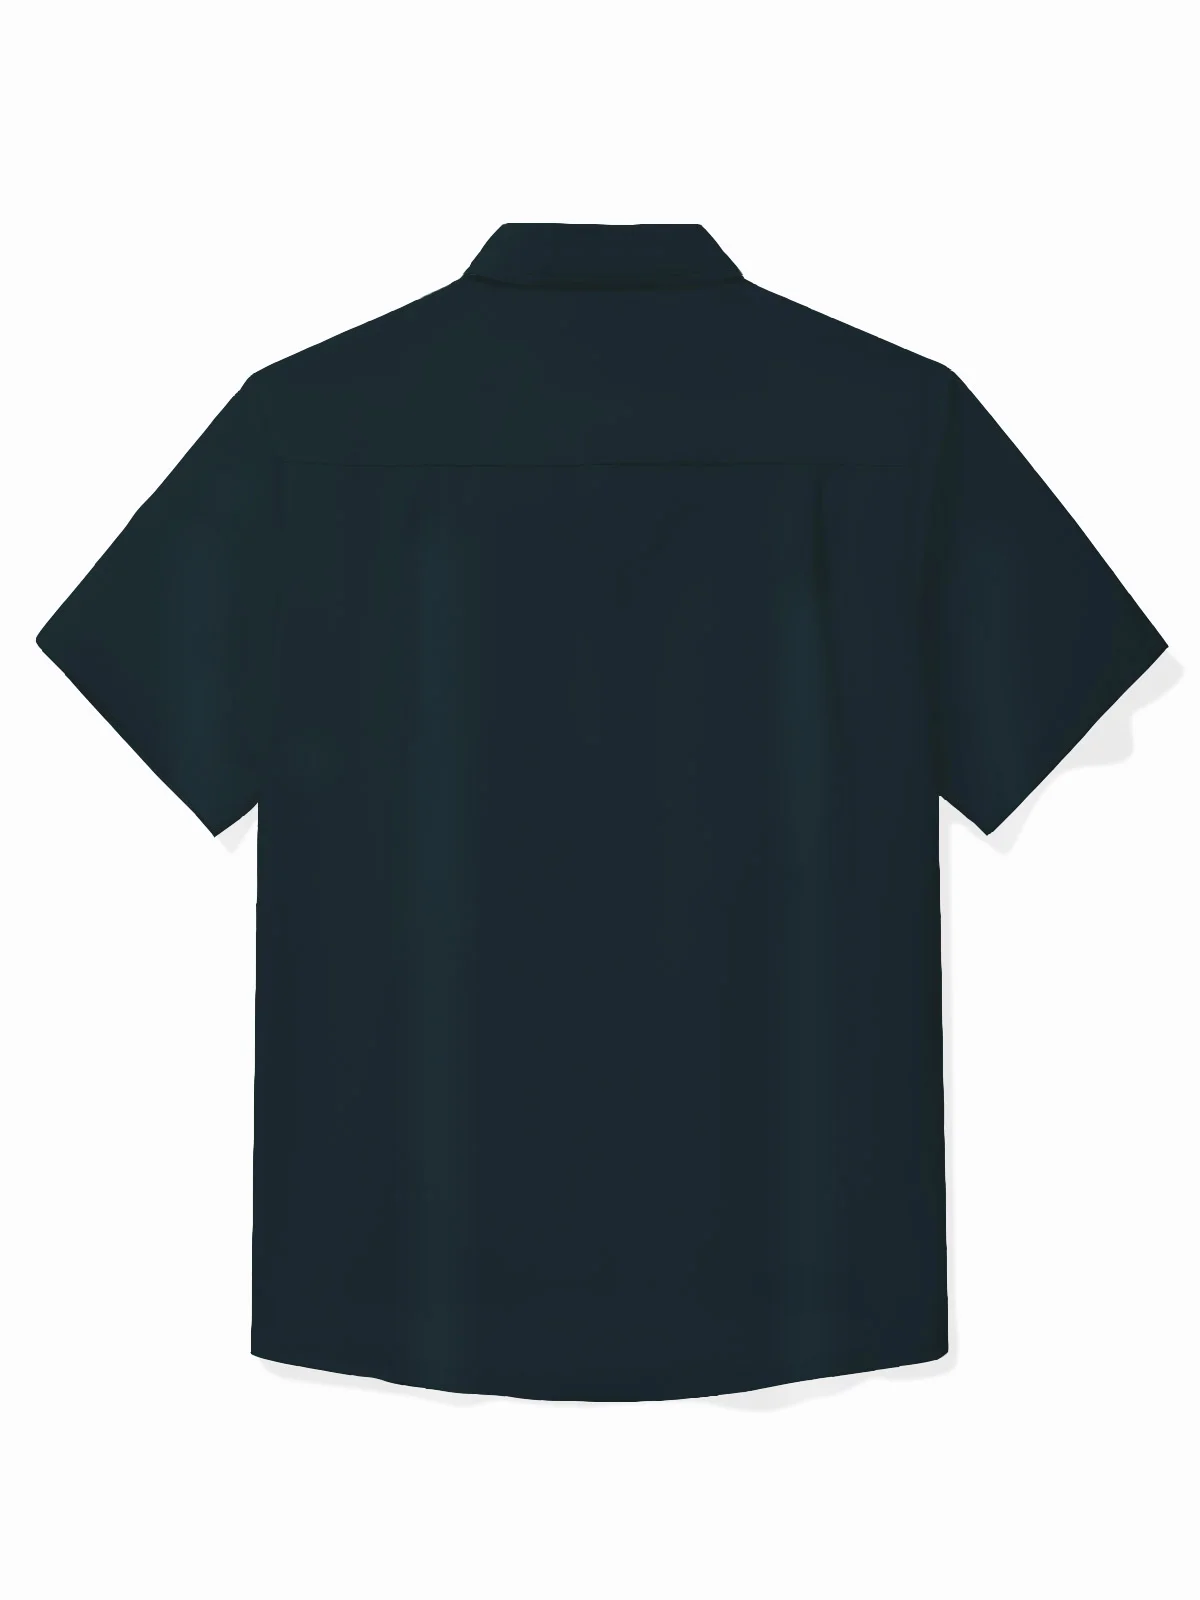 Royaura® Easter Cross Men's Bowling Shirt Stretch Pocket Camp Shirt Big Tall